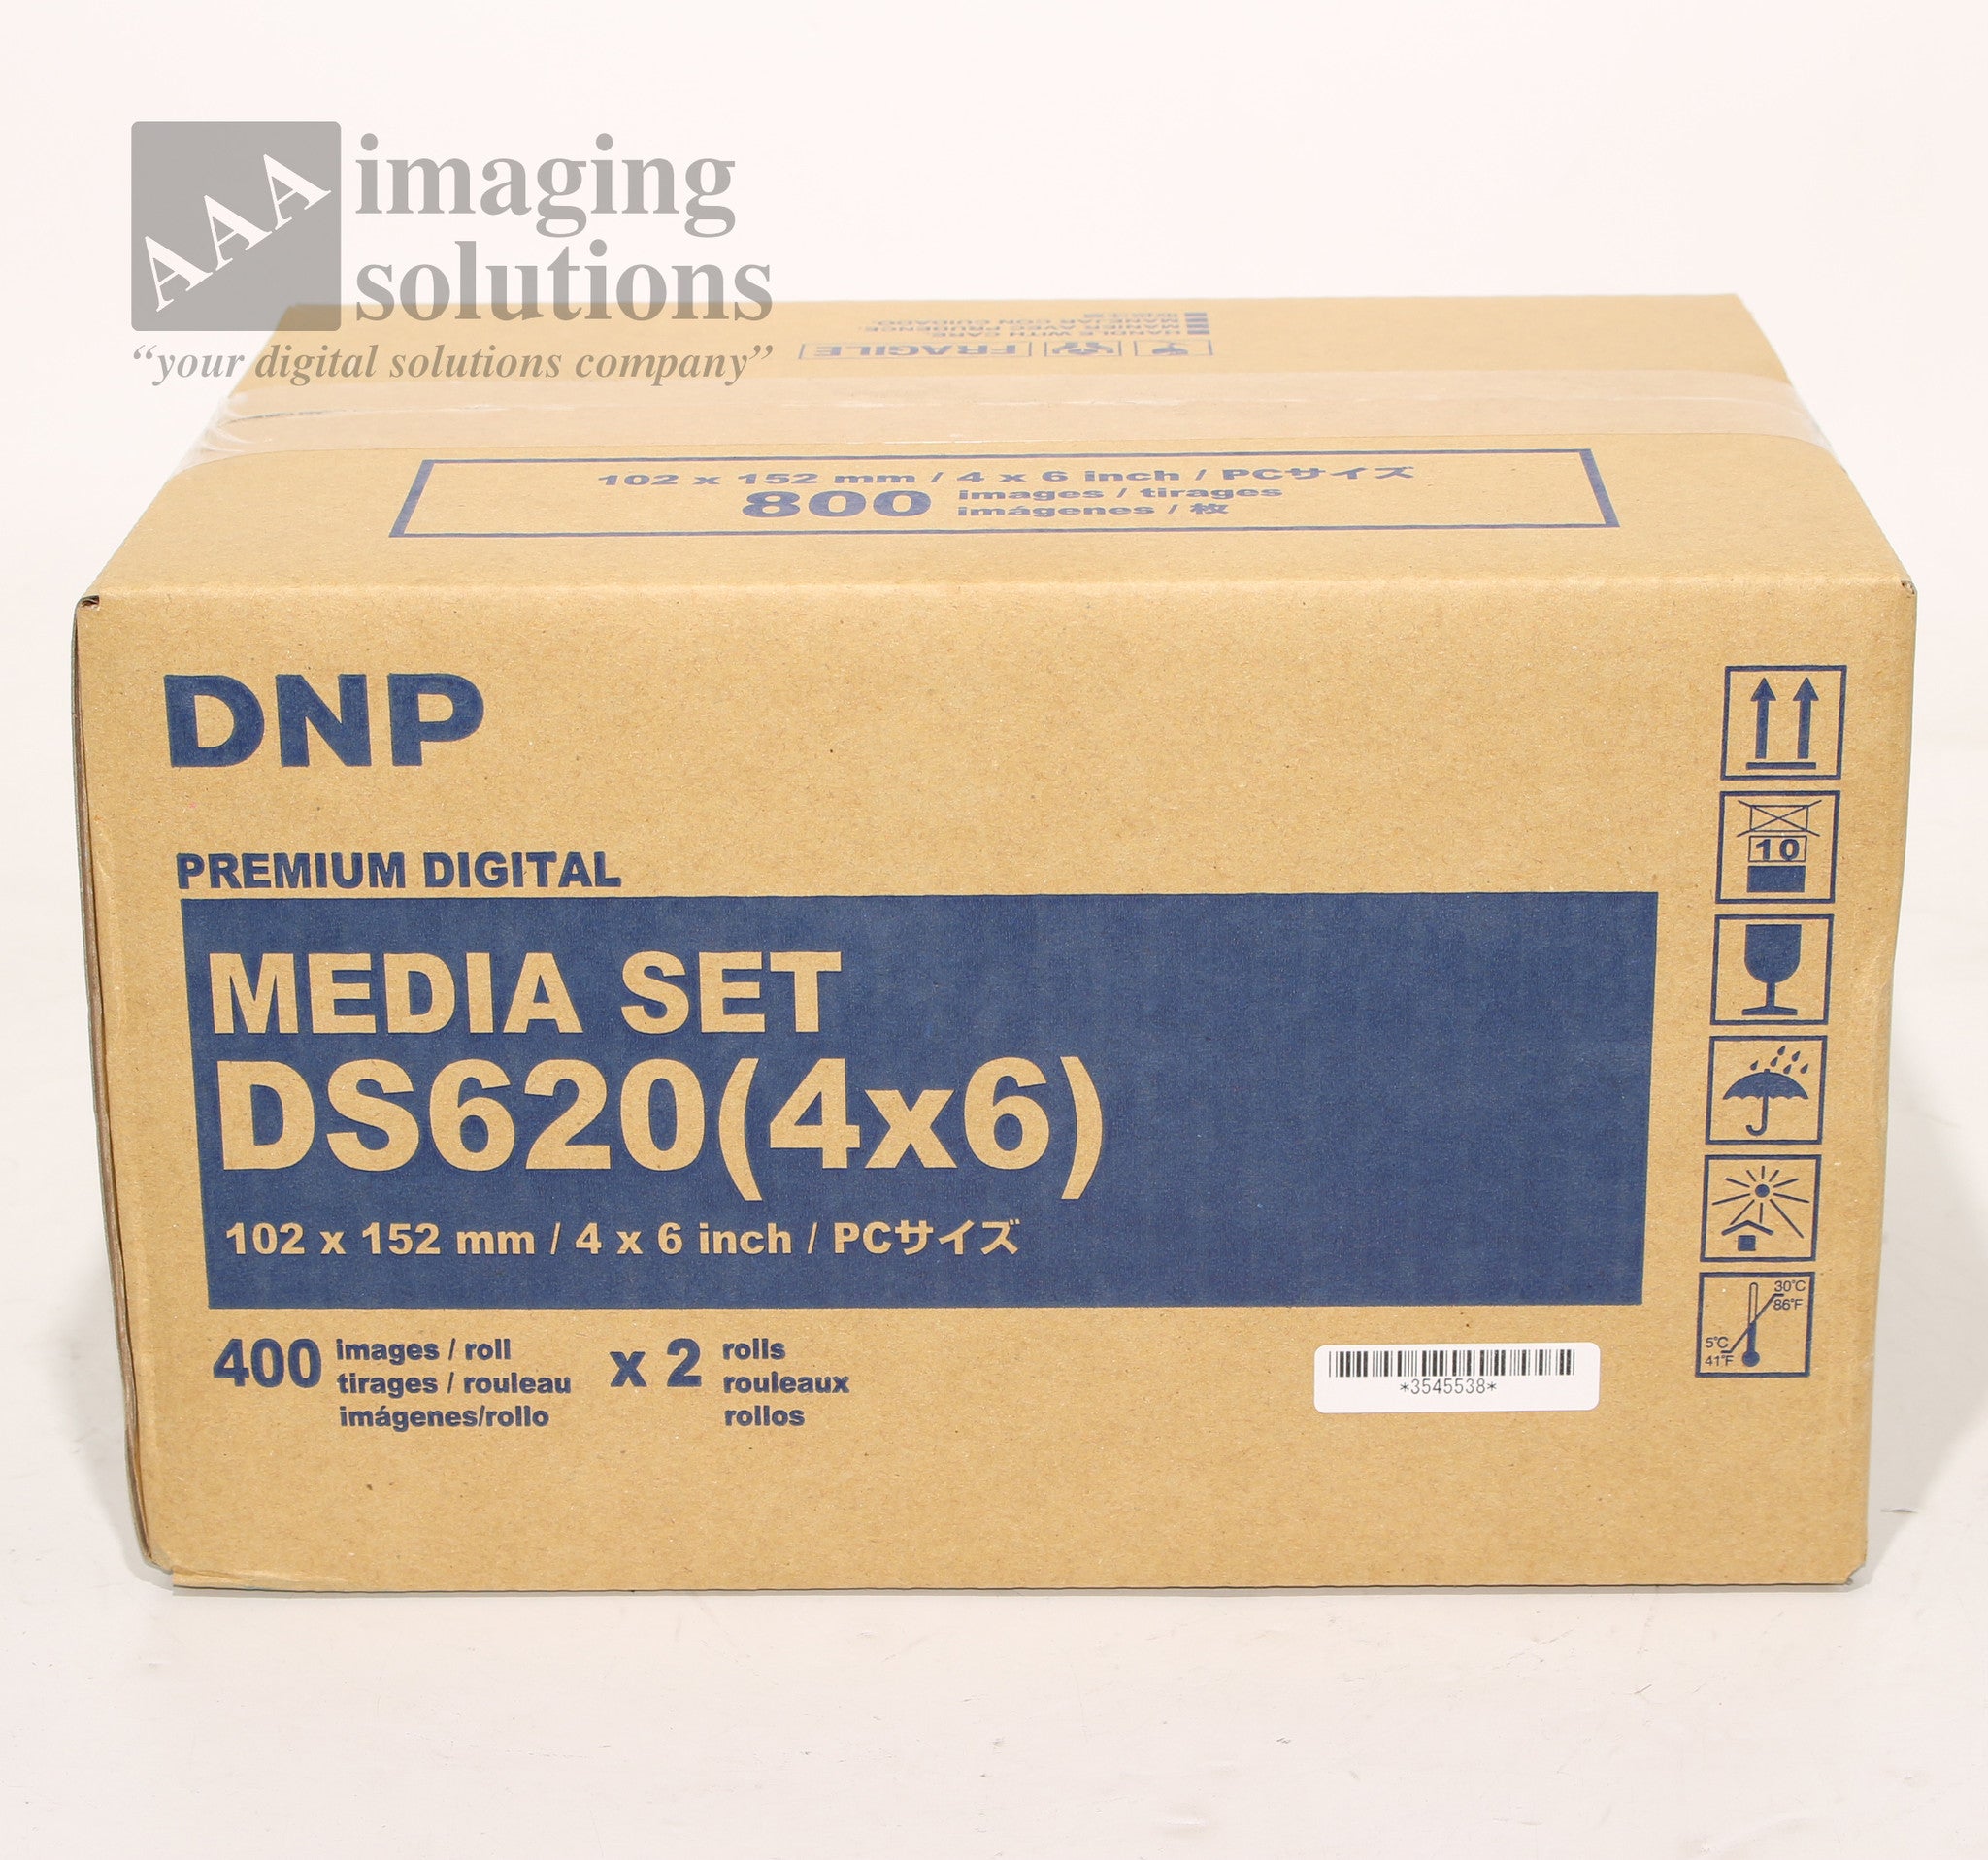 DNP 5 x 7 Print Pack for DS40 Printer (2-Pack)